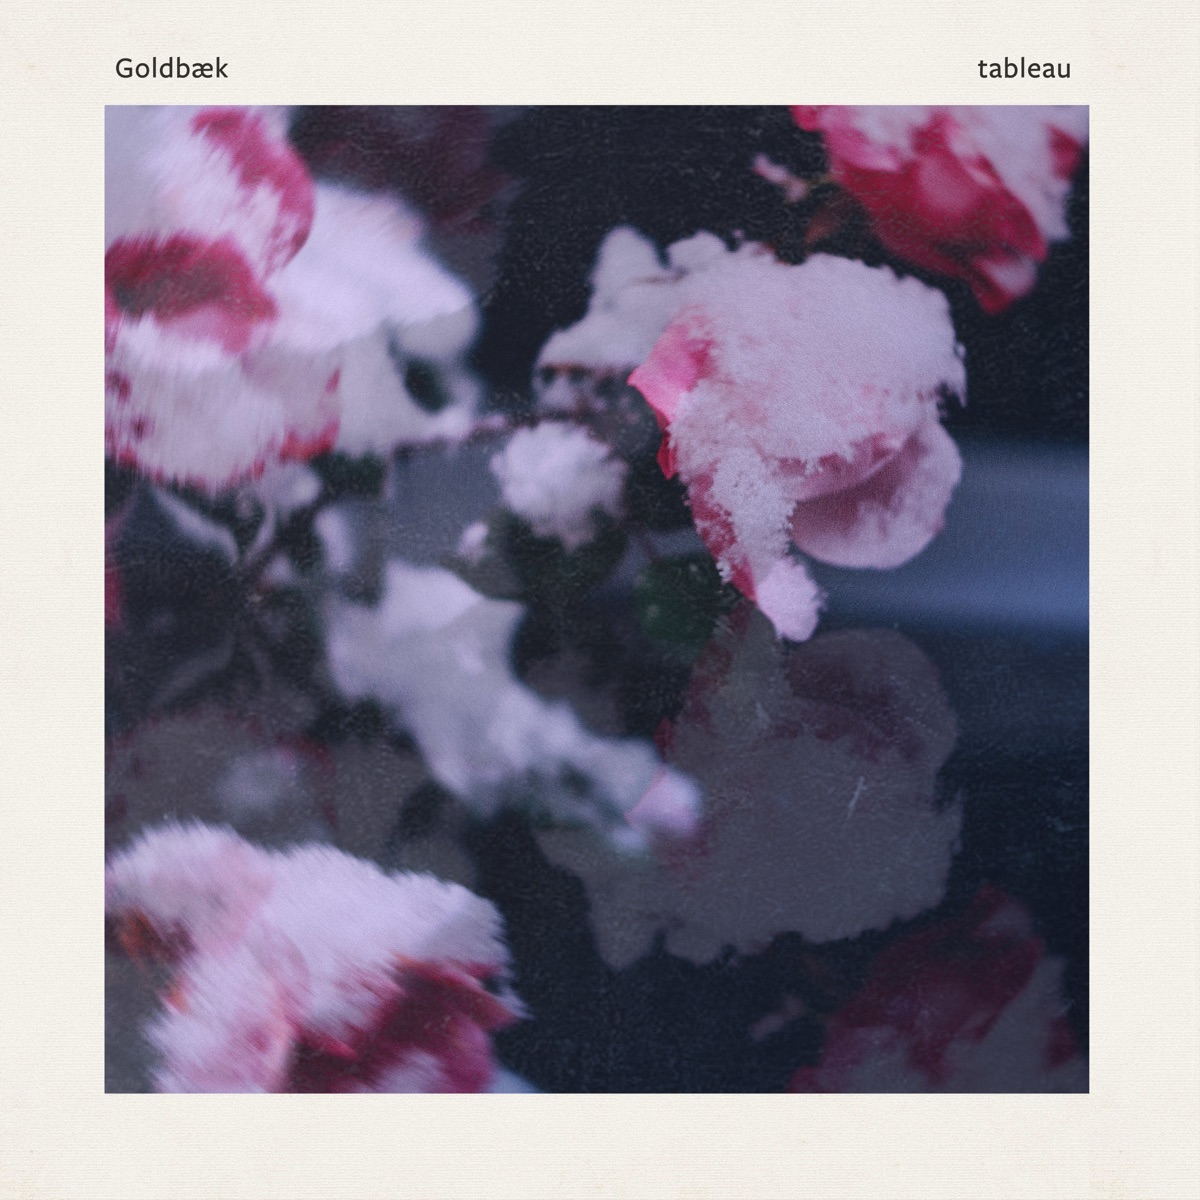 tableau - Single - Album by Goldbæk - Apple Music